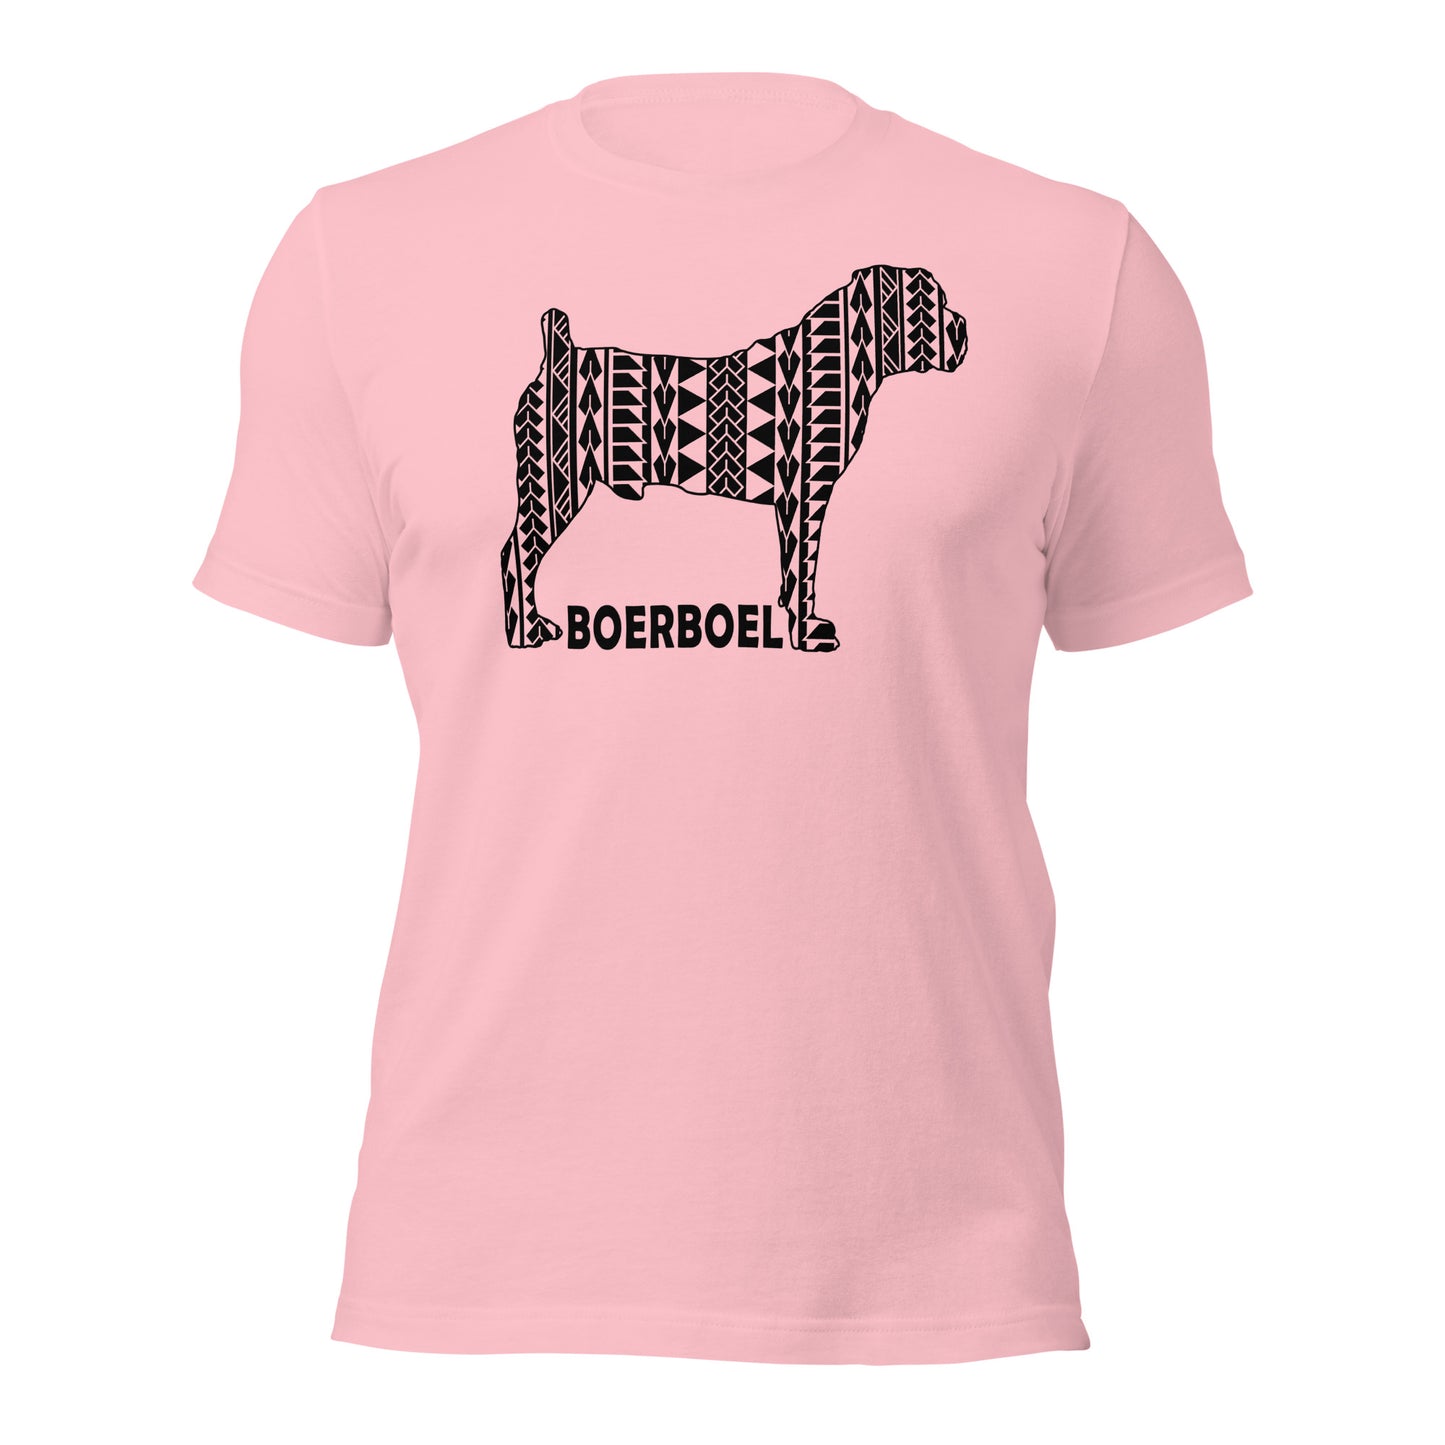 Boerboel Polynesian t-shirt pink by Dog Artistry.